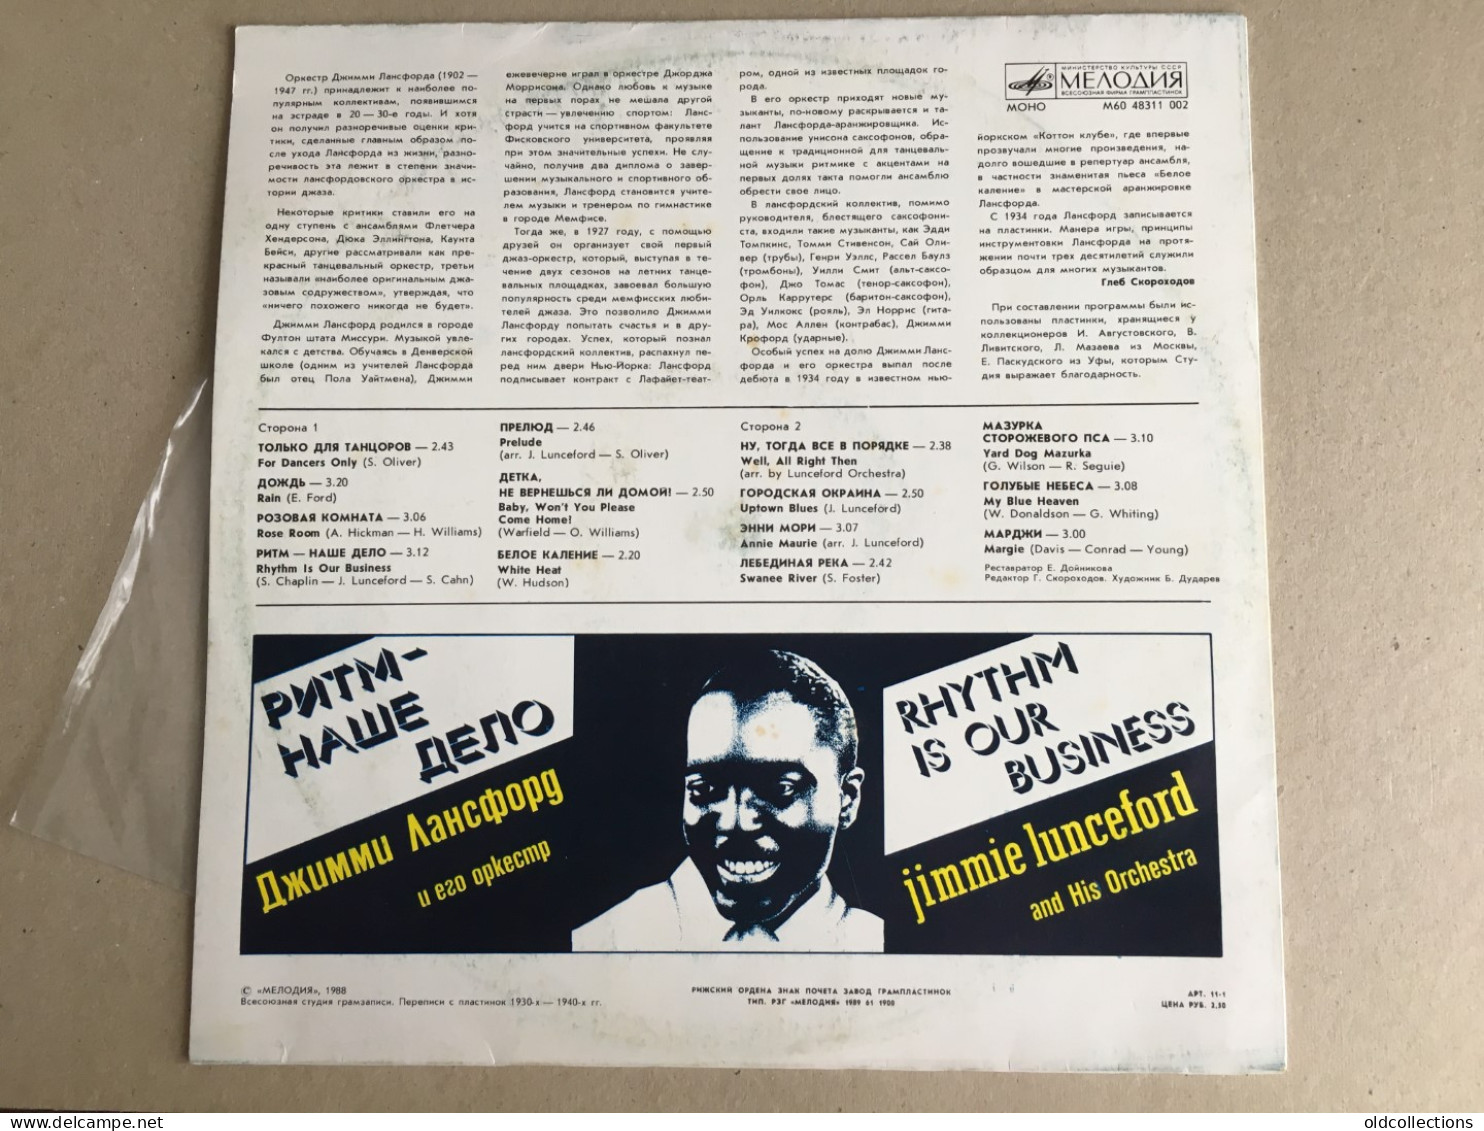 Schallplatte Vinyl Record Disque Vinyle LP Record - Jimmie Lunceford Rhythm Is Our Business  - Musiche Del Mondo